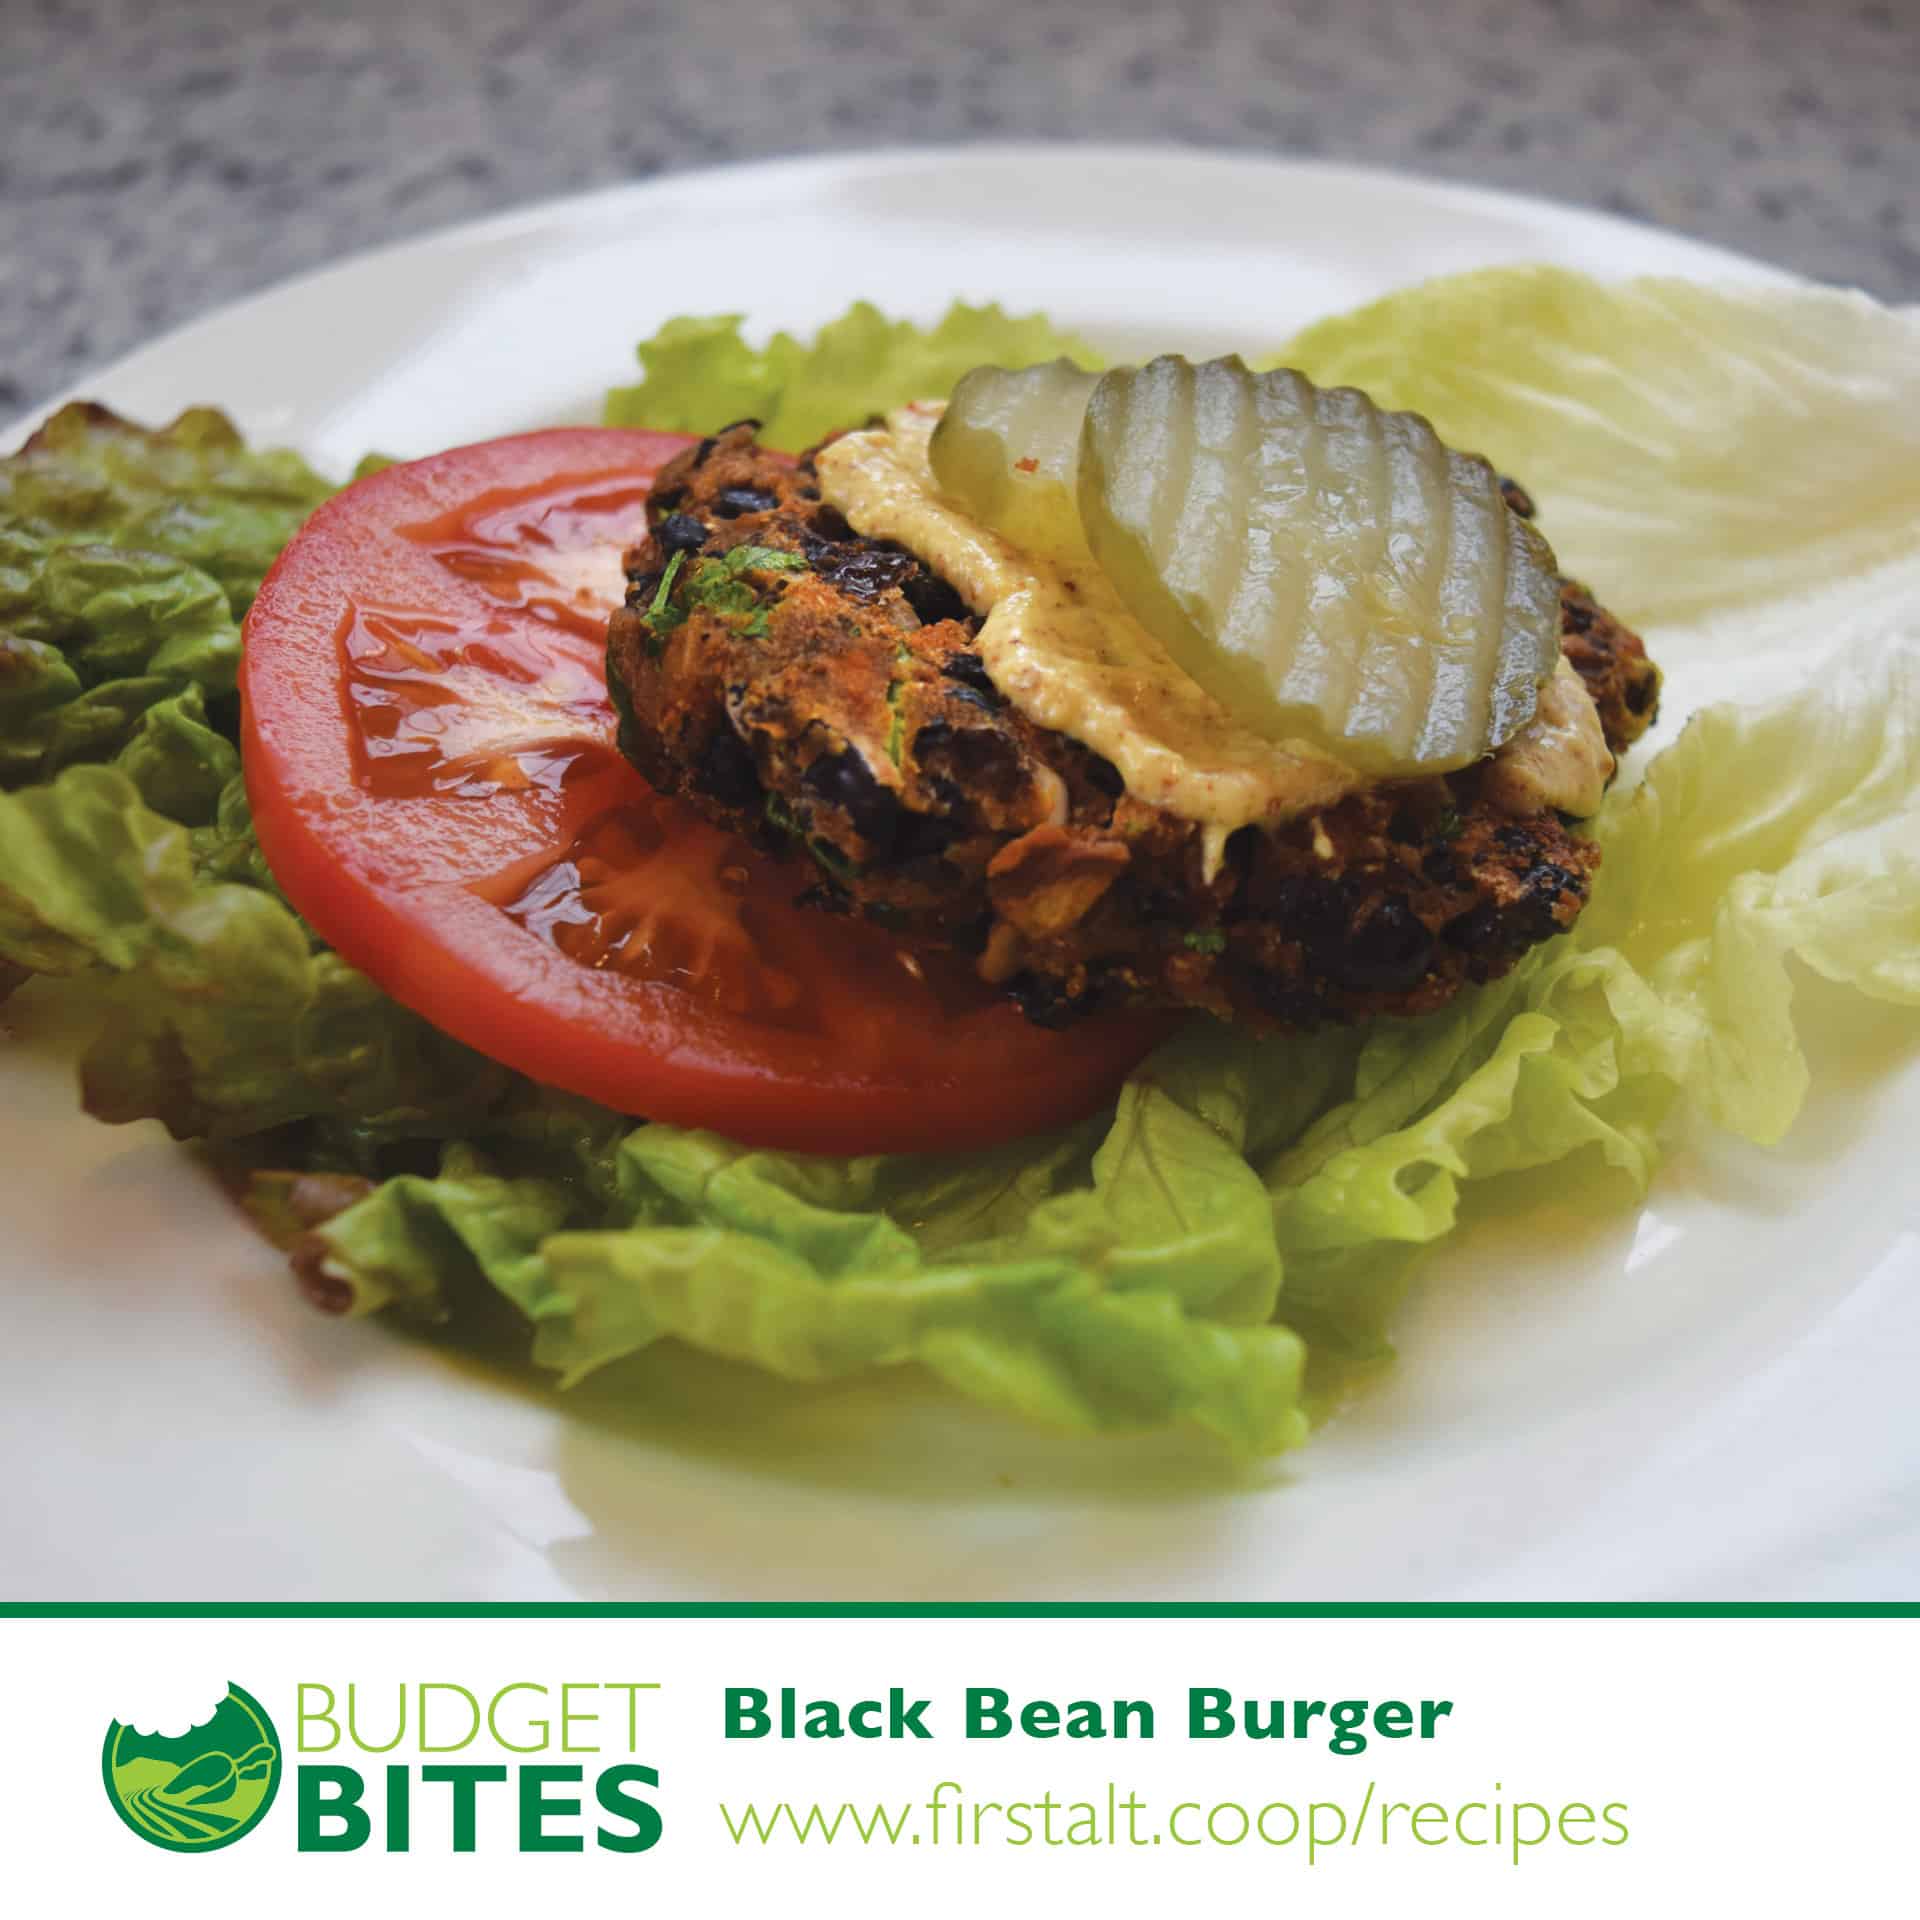 Budget Bites Online – Black Bean Burger